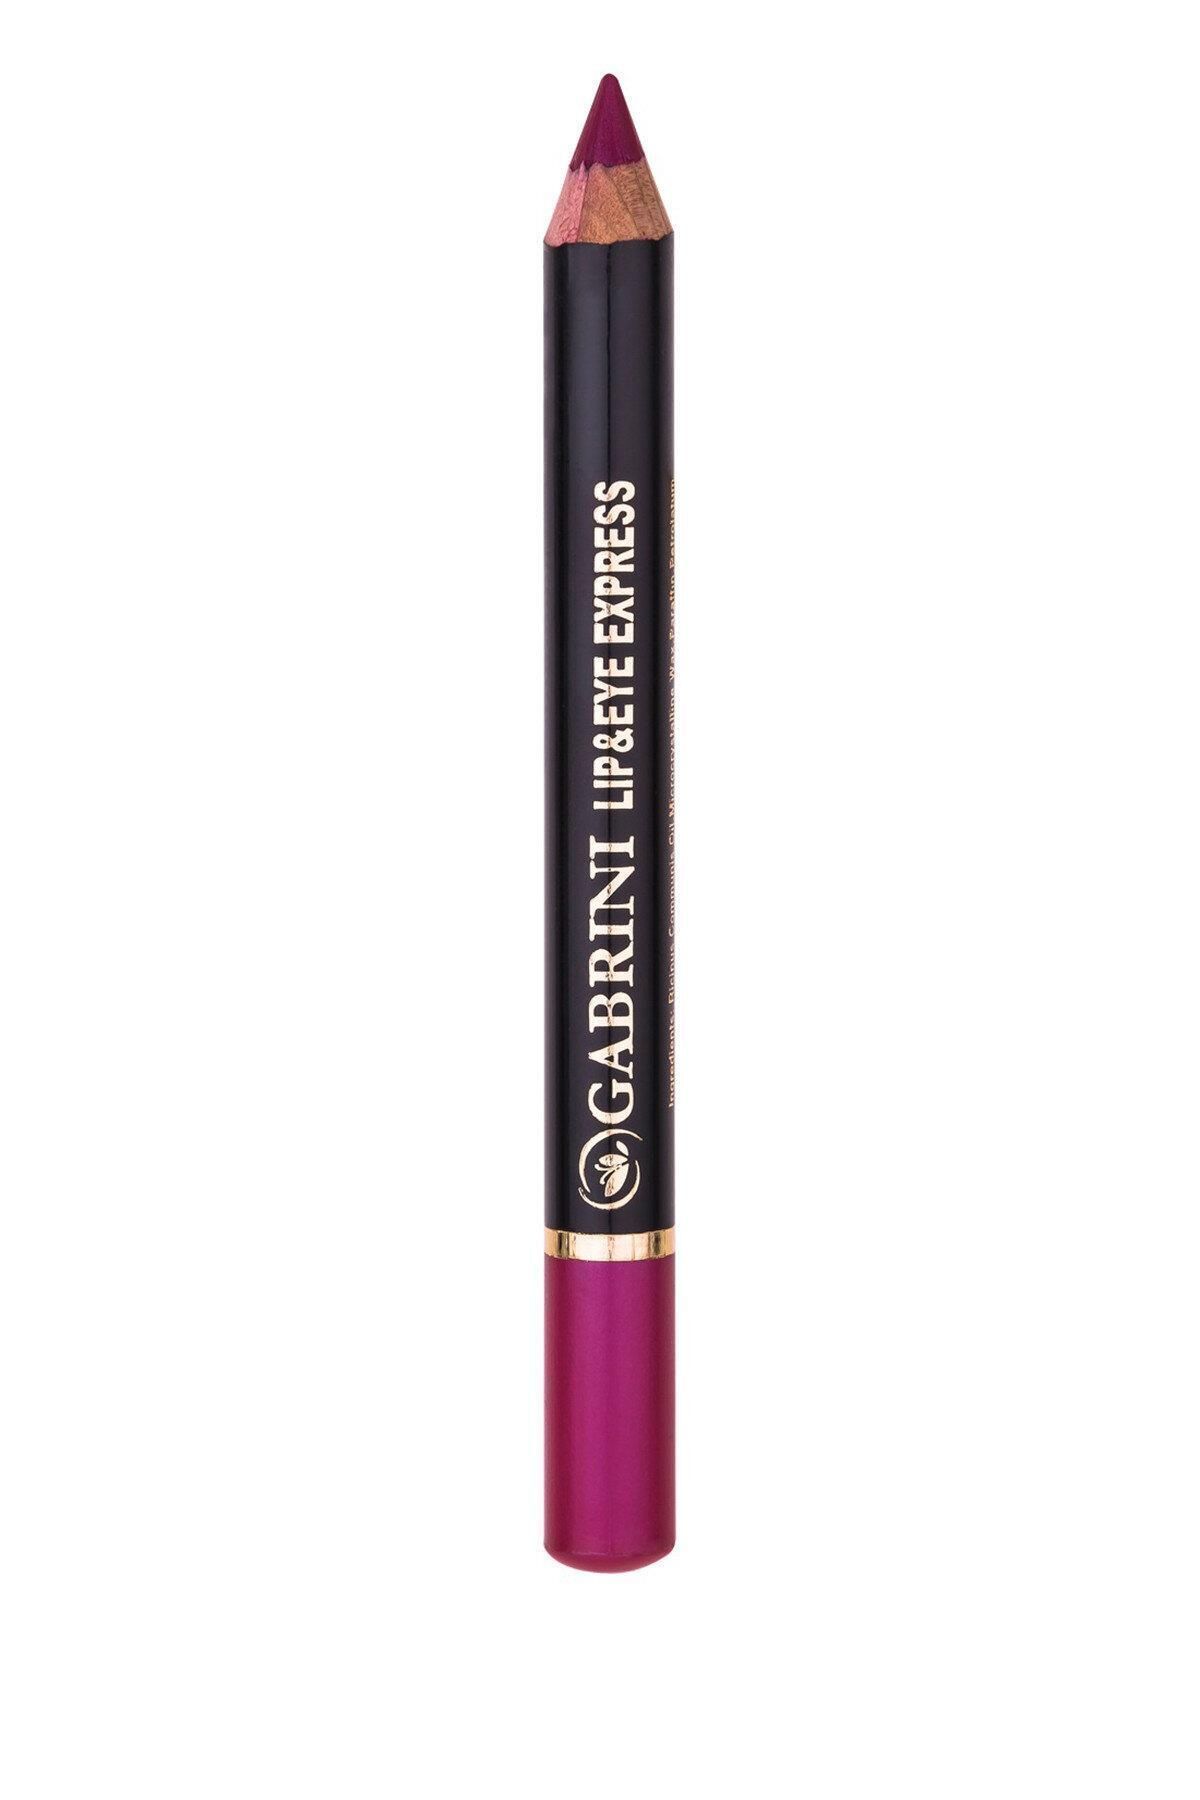 Gabrini Express Lip& Eye Pencil - 127